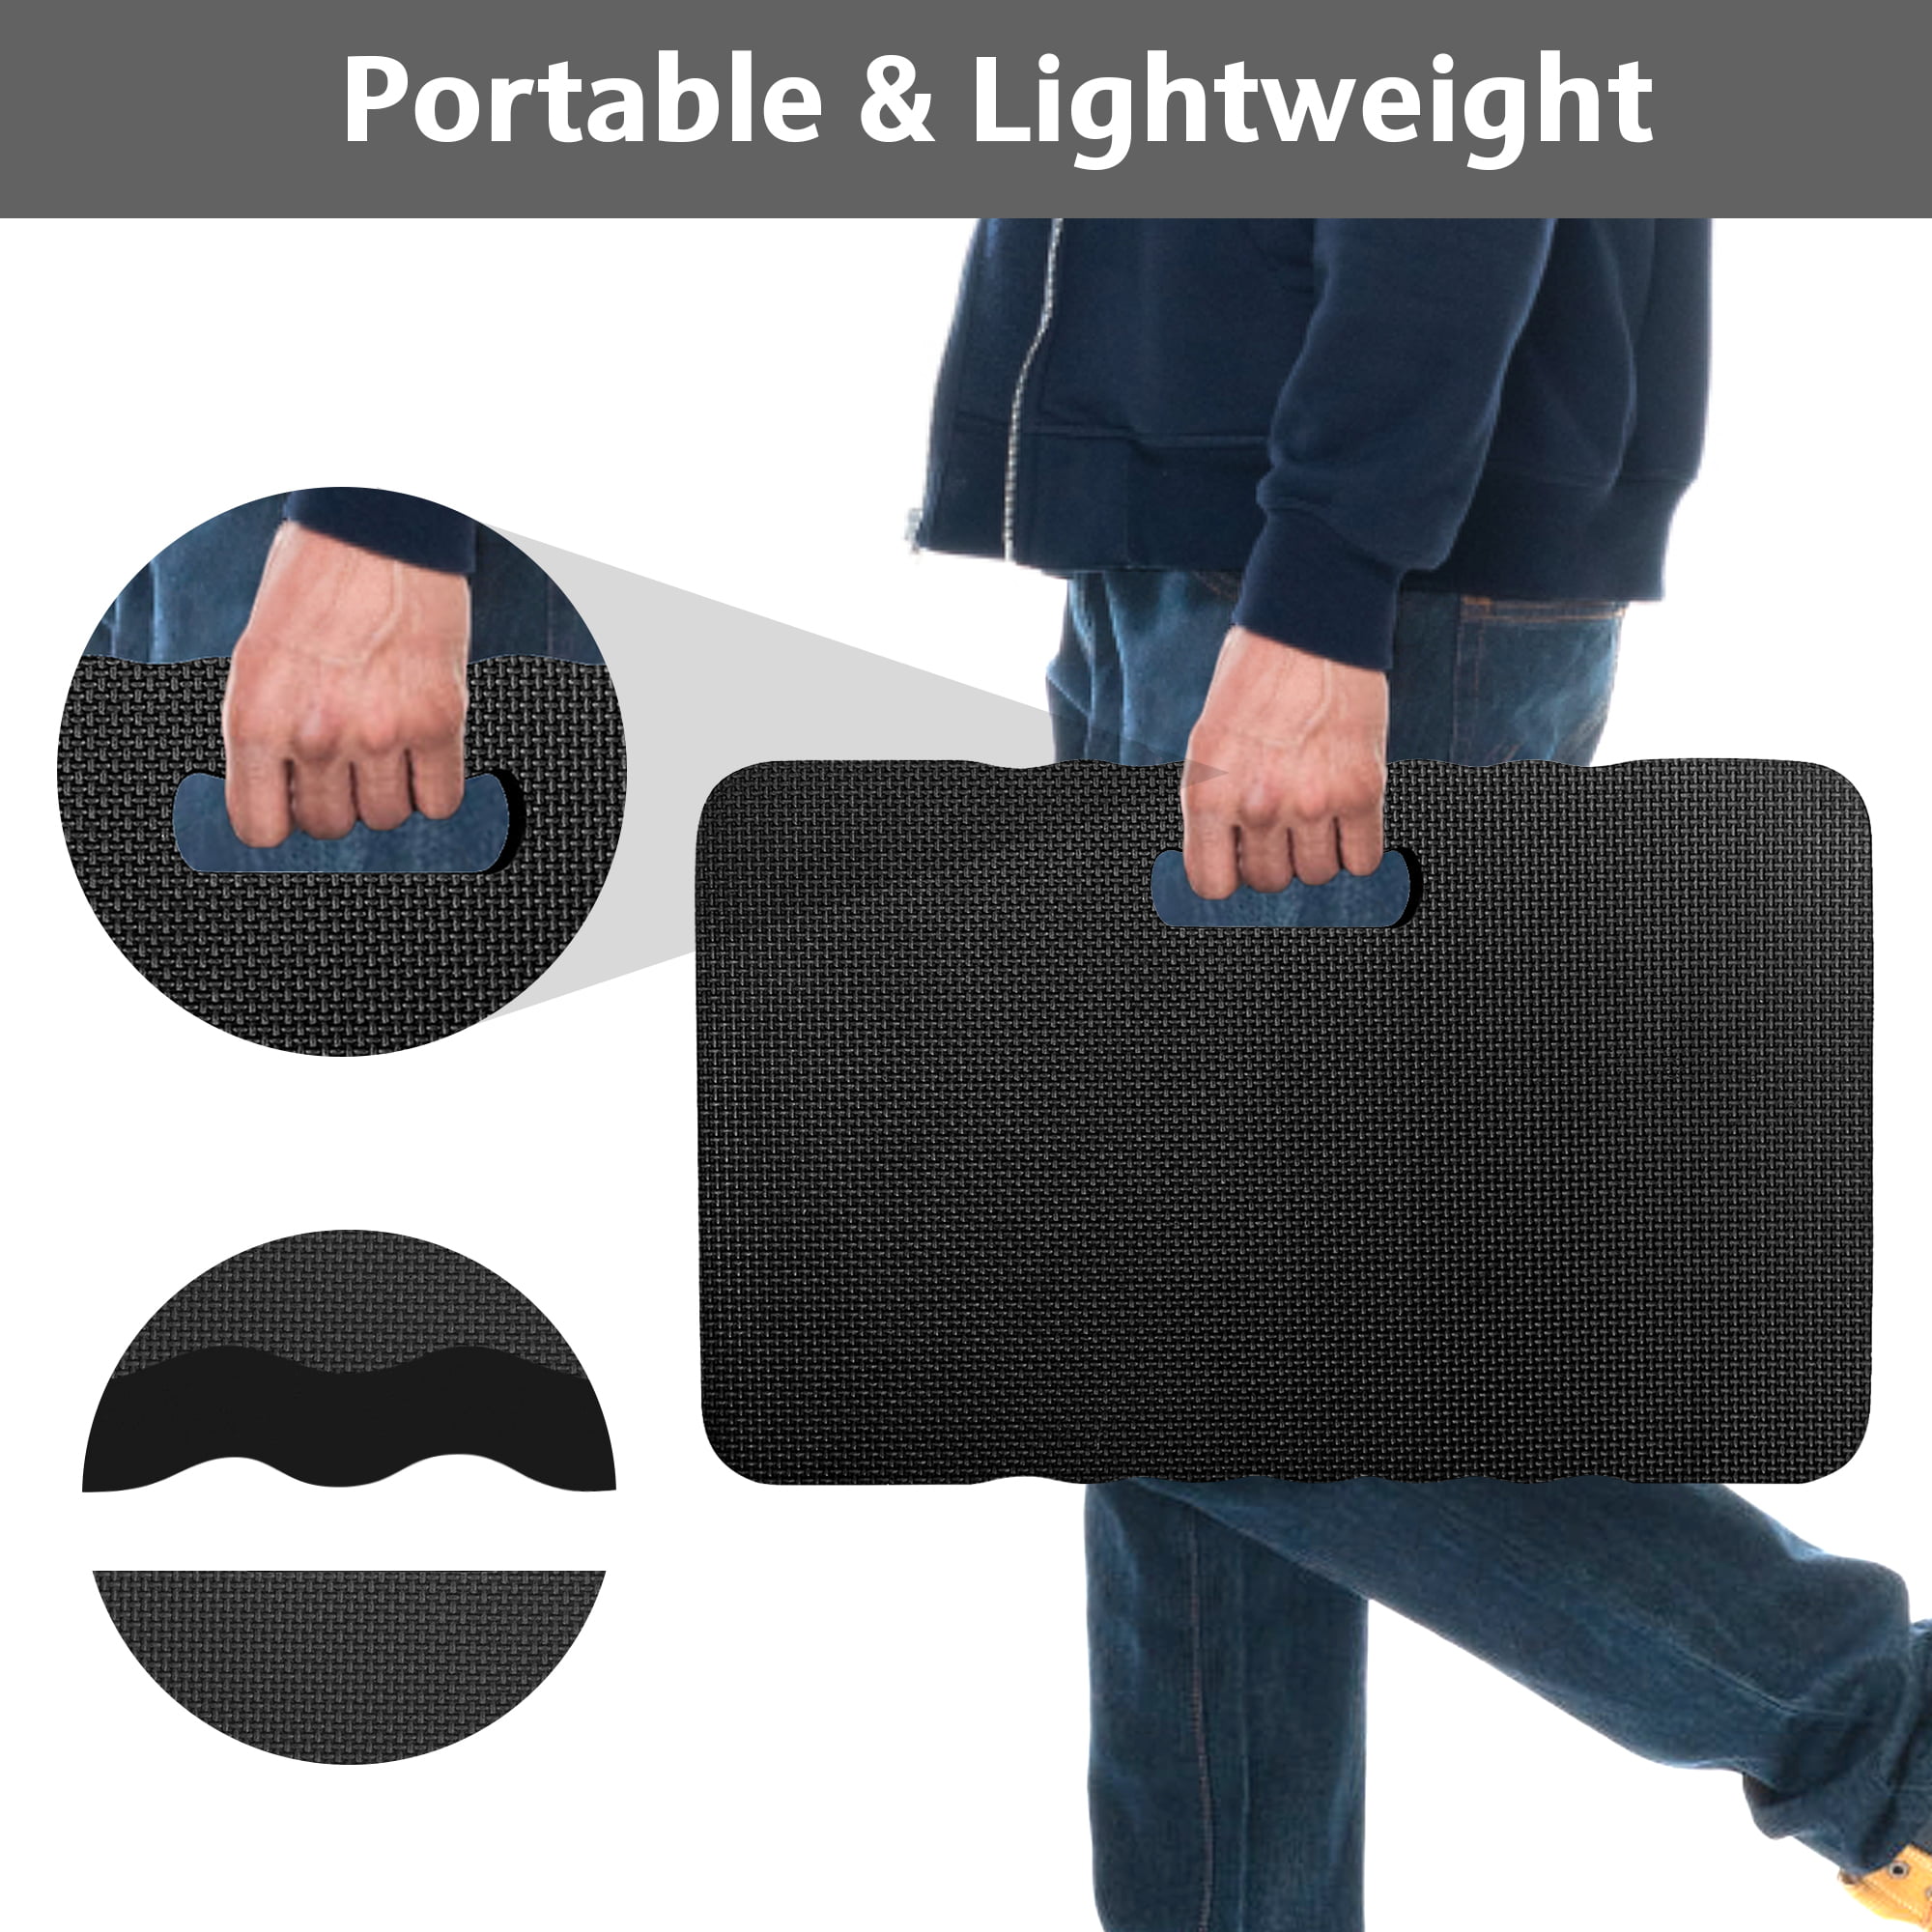 Gorilla Grip Original Premium Thick Kneeling Pad, Comfortable Foam Mat to Kneel